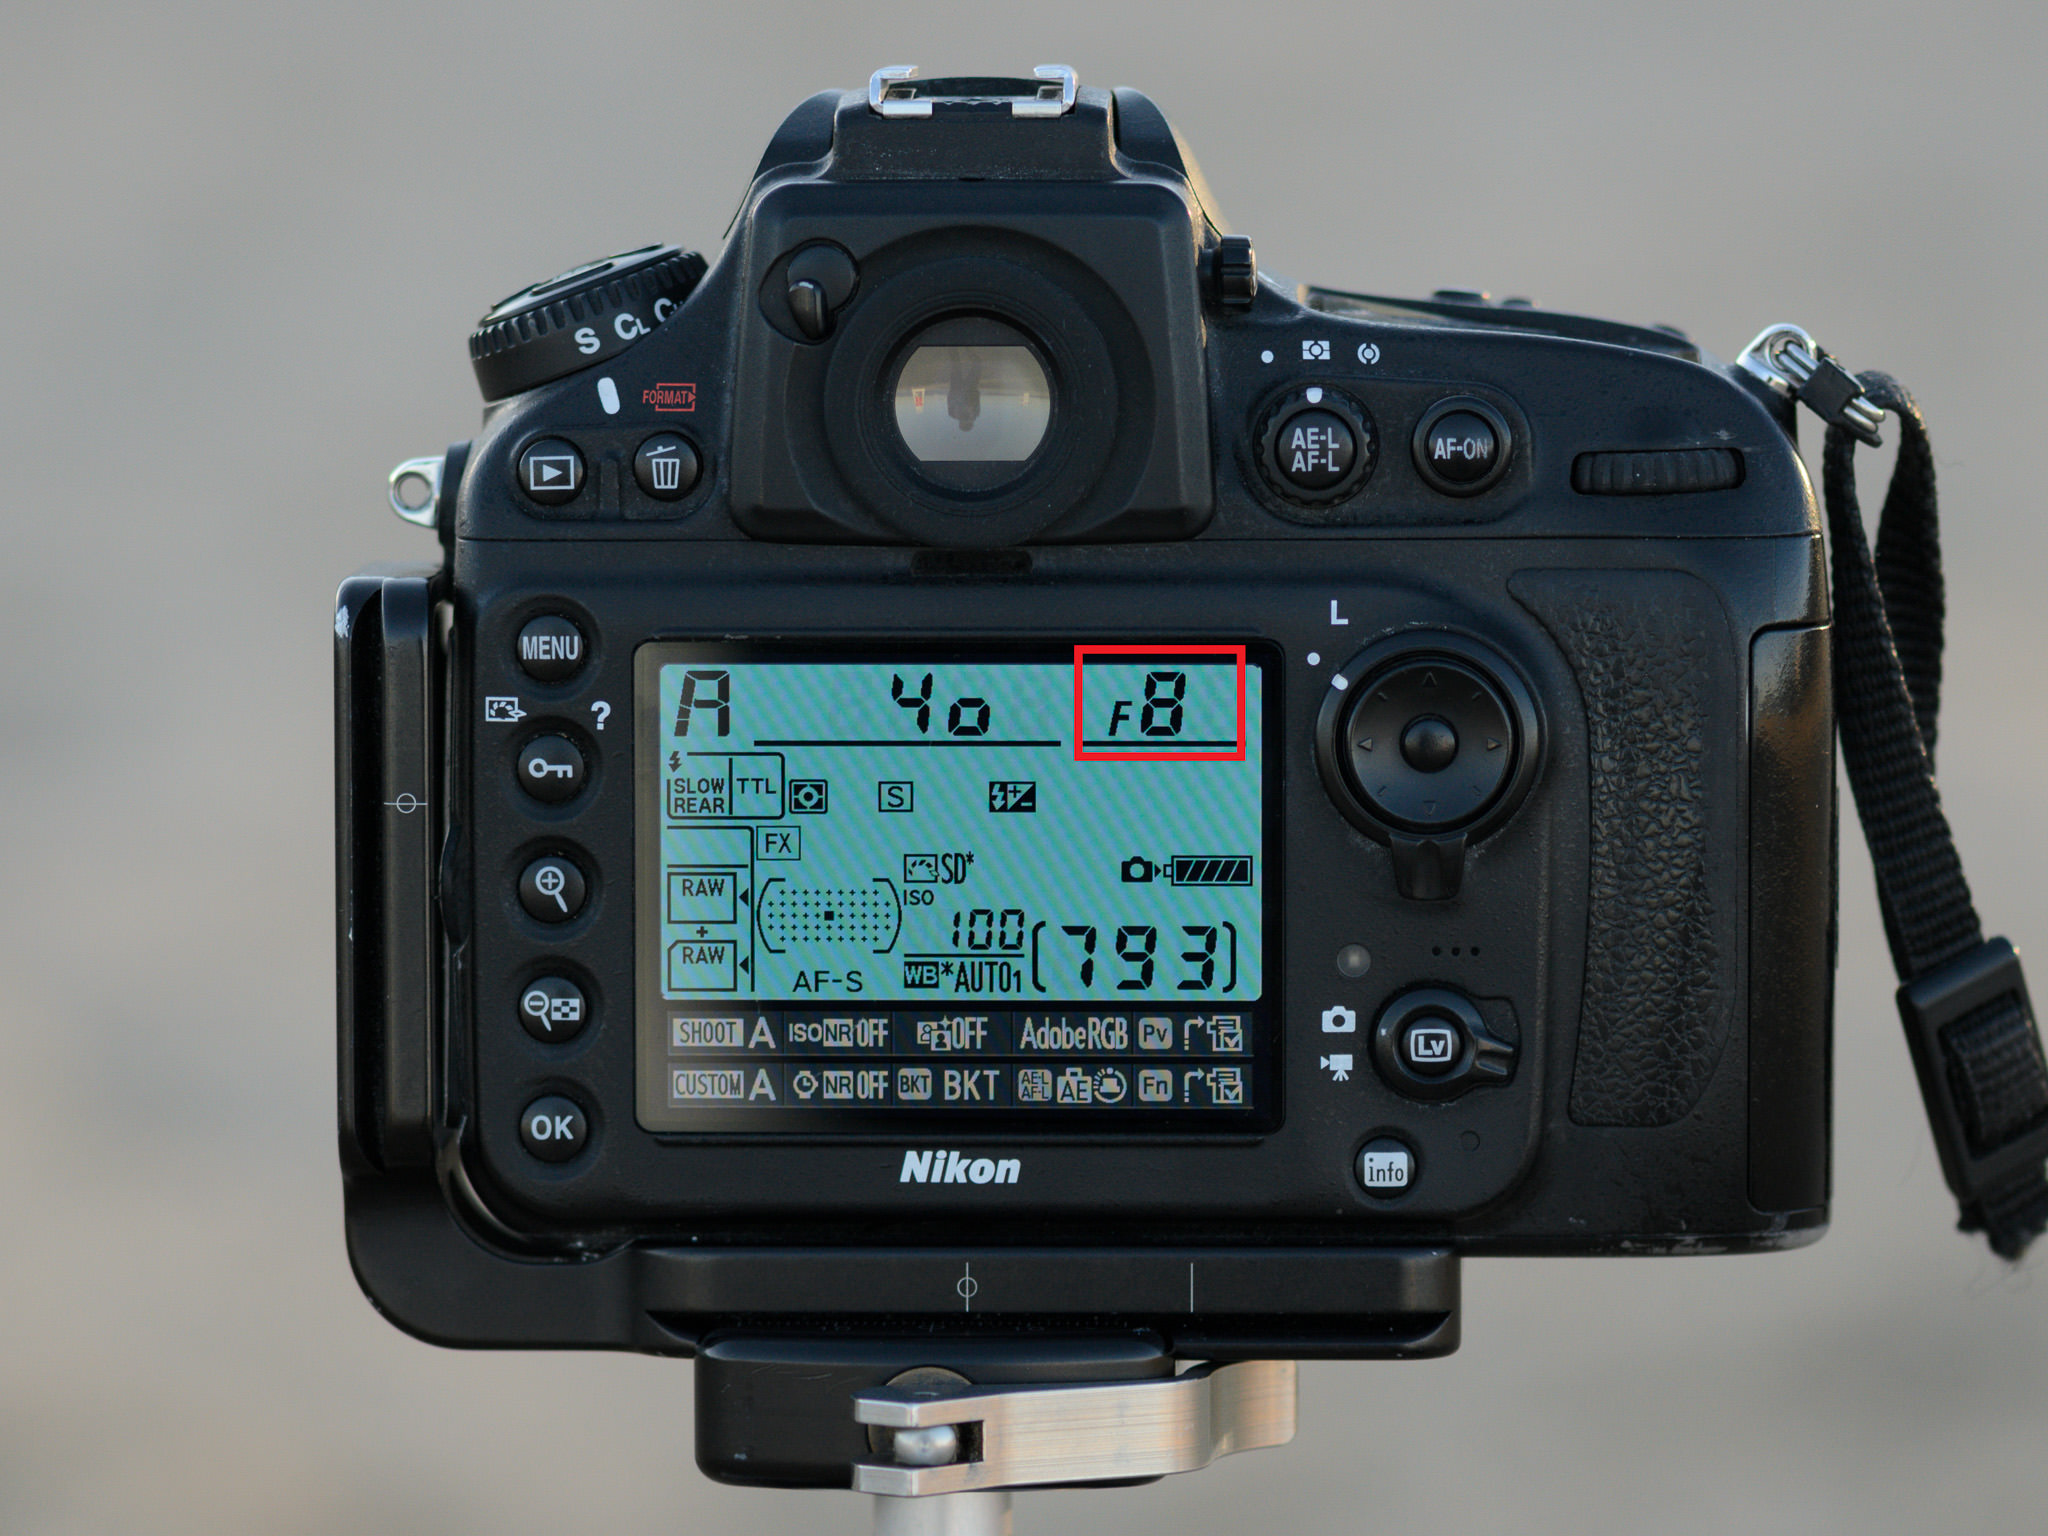 F-Stops Explained — Camera Lens Tutorial 